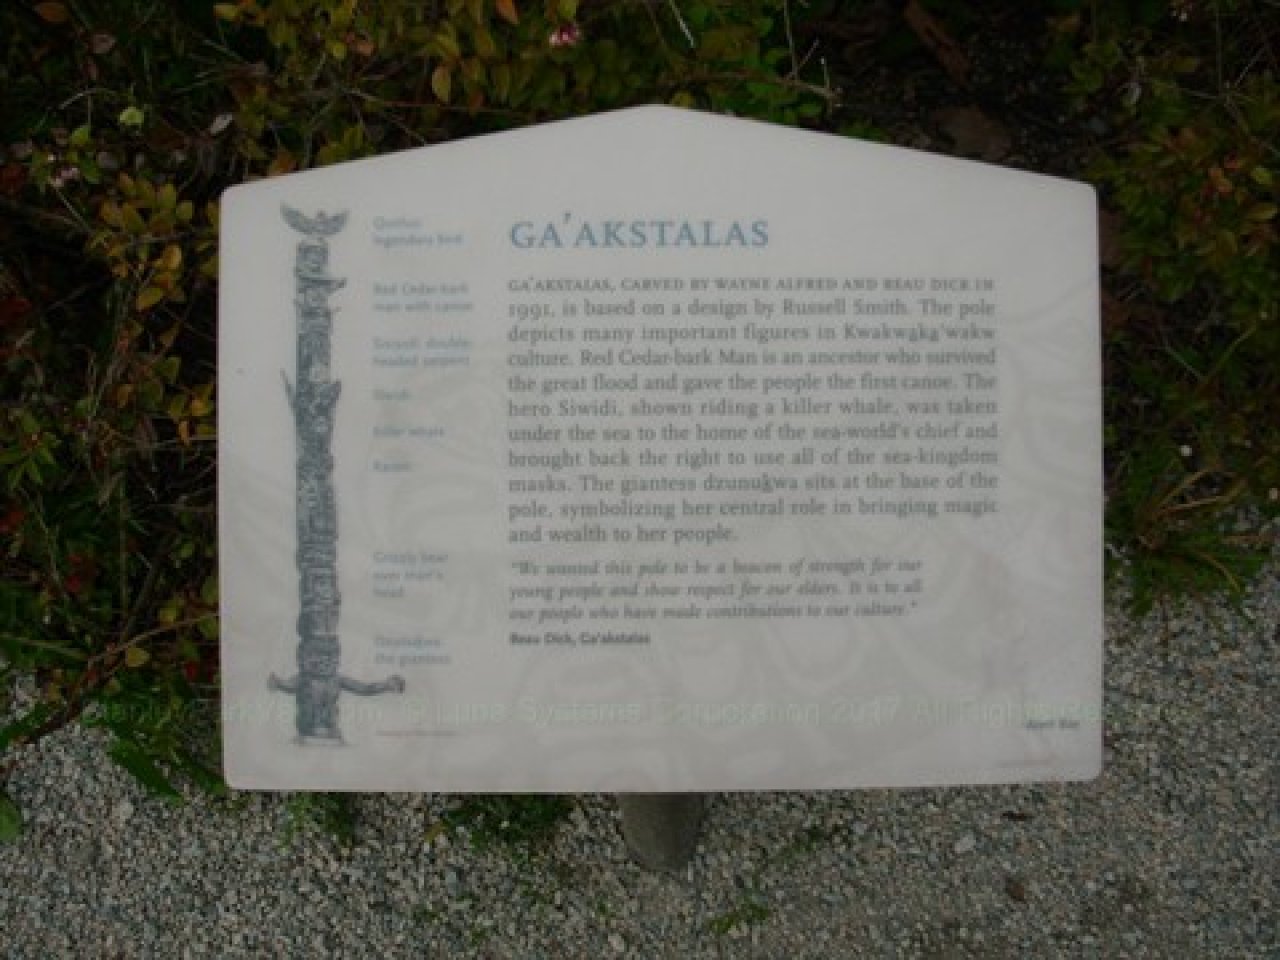 Ga'akstalas Totem Pole Plaque. Source: http://stanleyparkvan.com/stanley-park-van-attractions-totem-poles.html